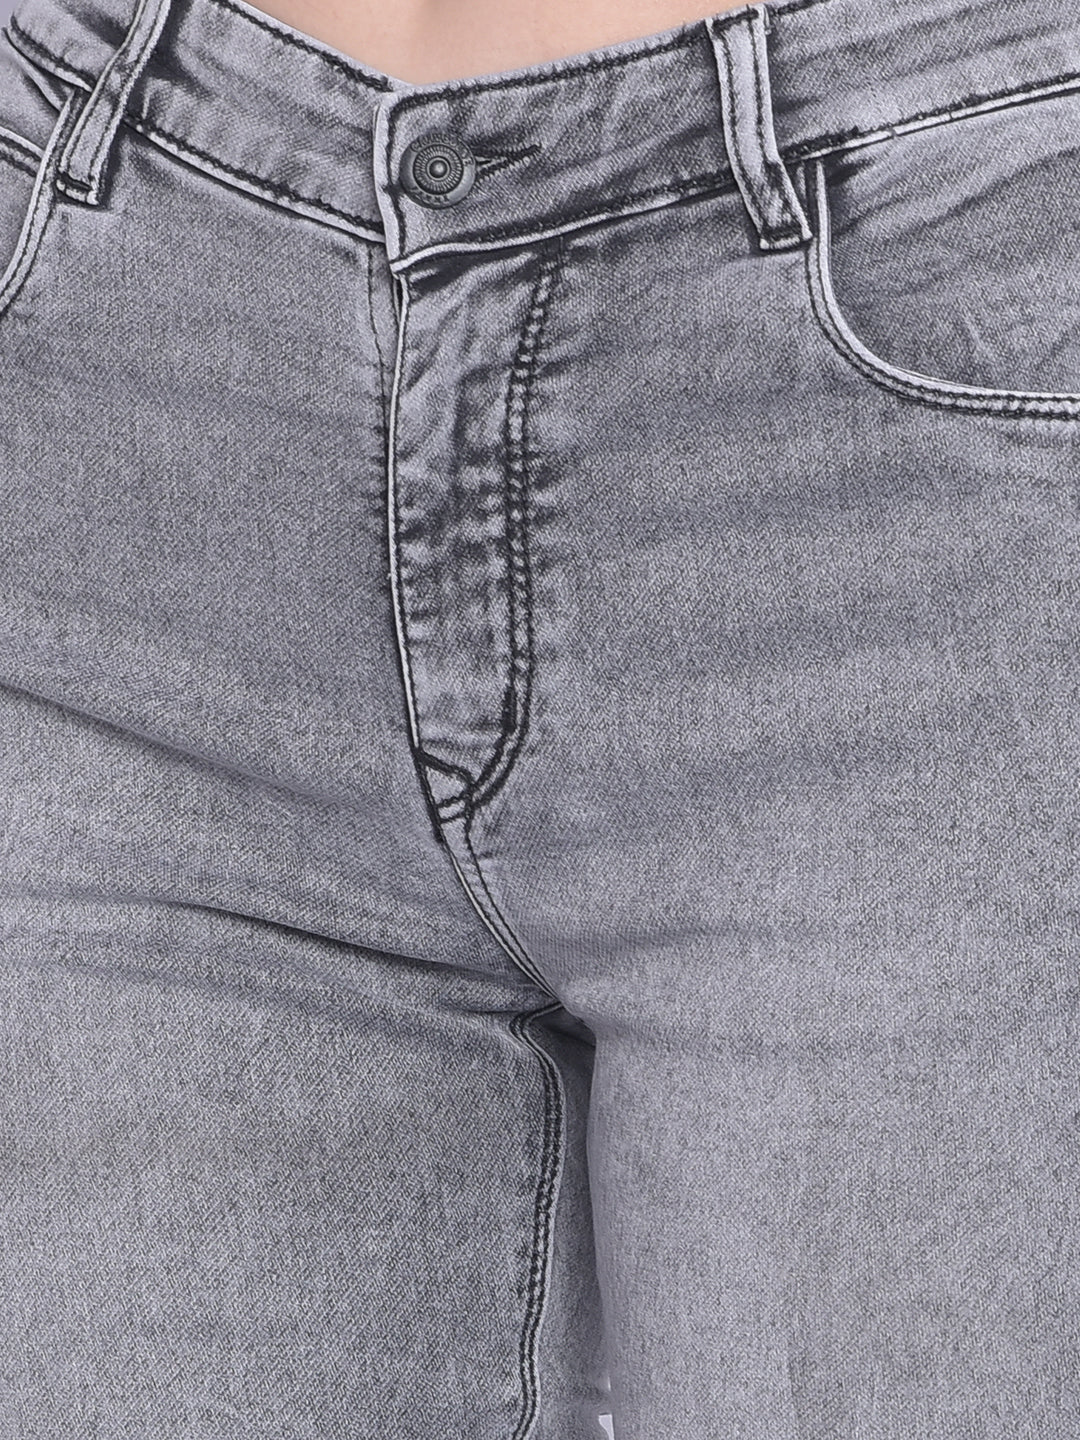 Grey Bootcut Jeans Jeans-Women Jeans-Crimsoune Club